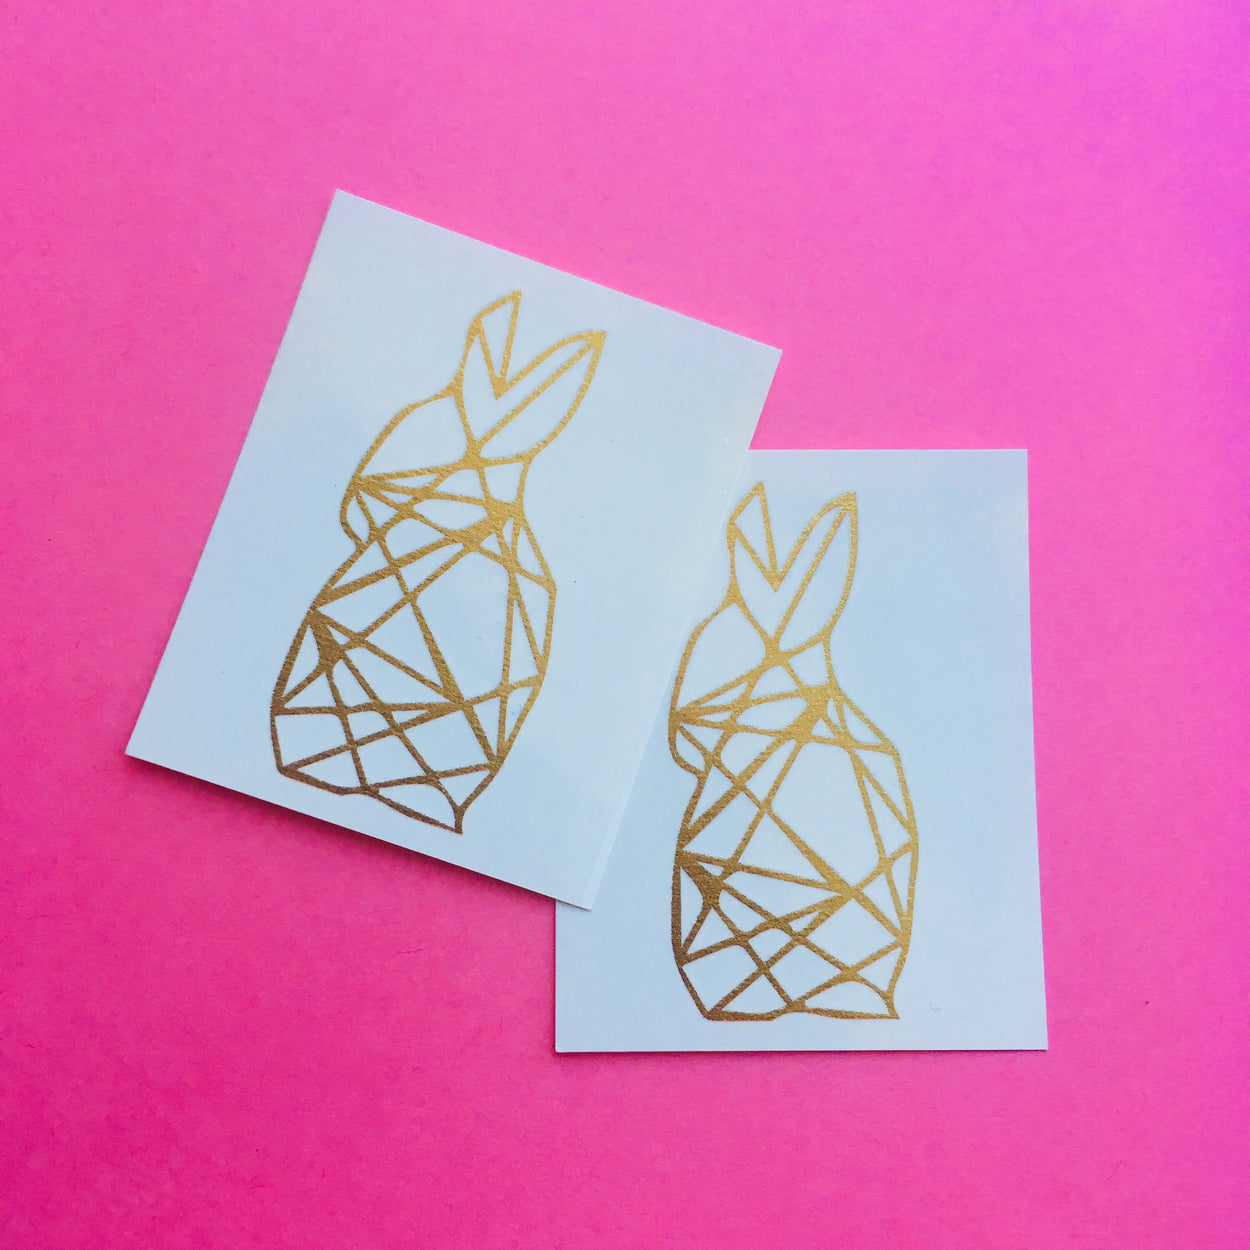 Gold Rabbit Tattoo | Sparkly metallic geometric  bunny temporary tattoo design, set of 3 tattoos